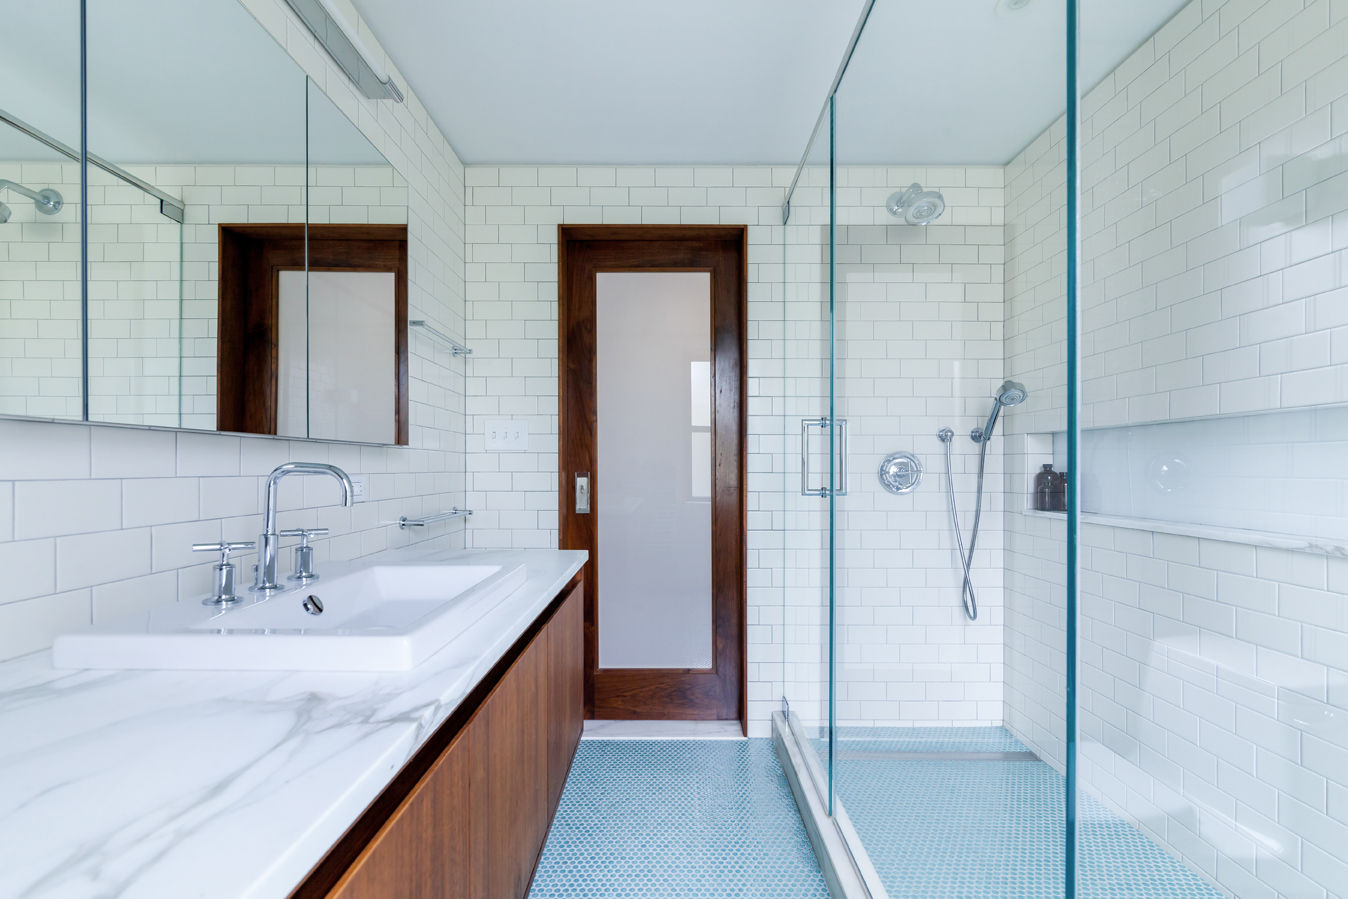 Rain Bath, Brooklyn New York - Bathroom Renovation Blue Tiles